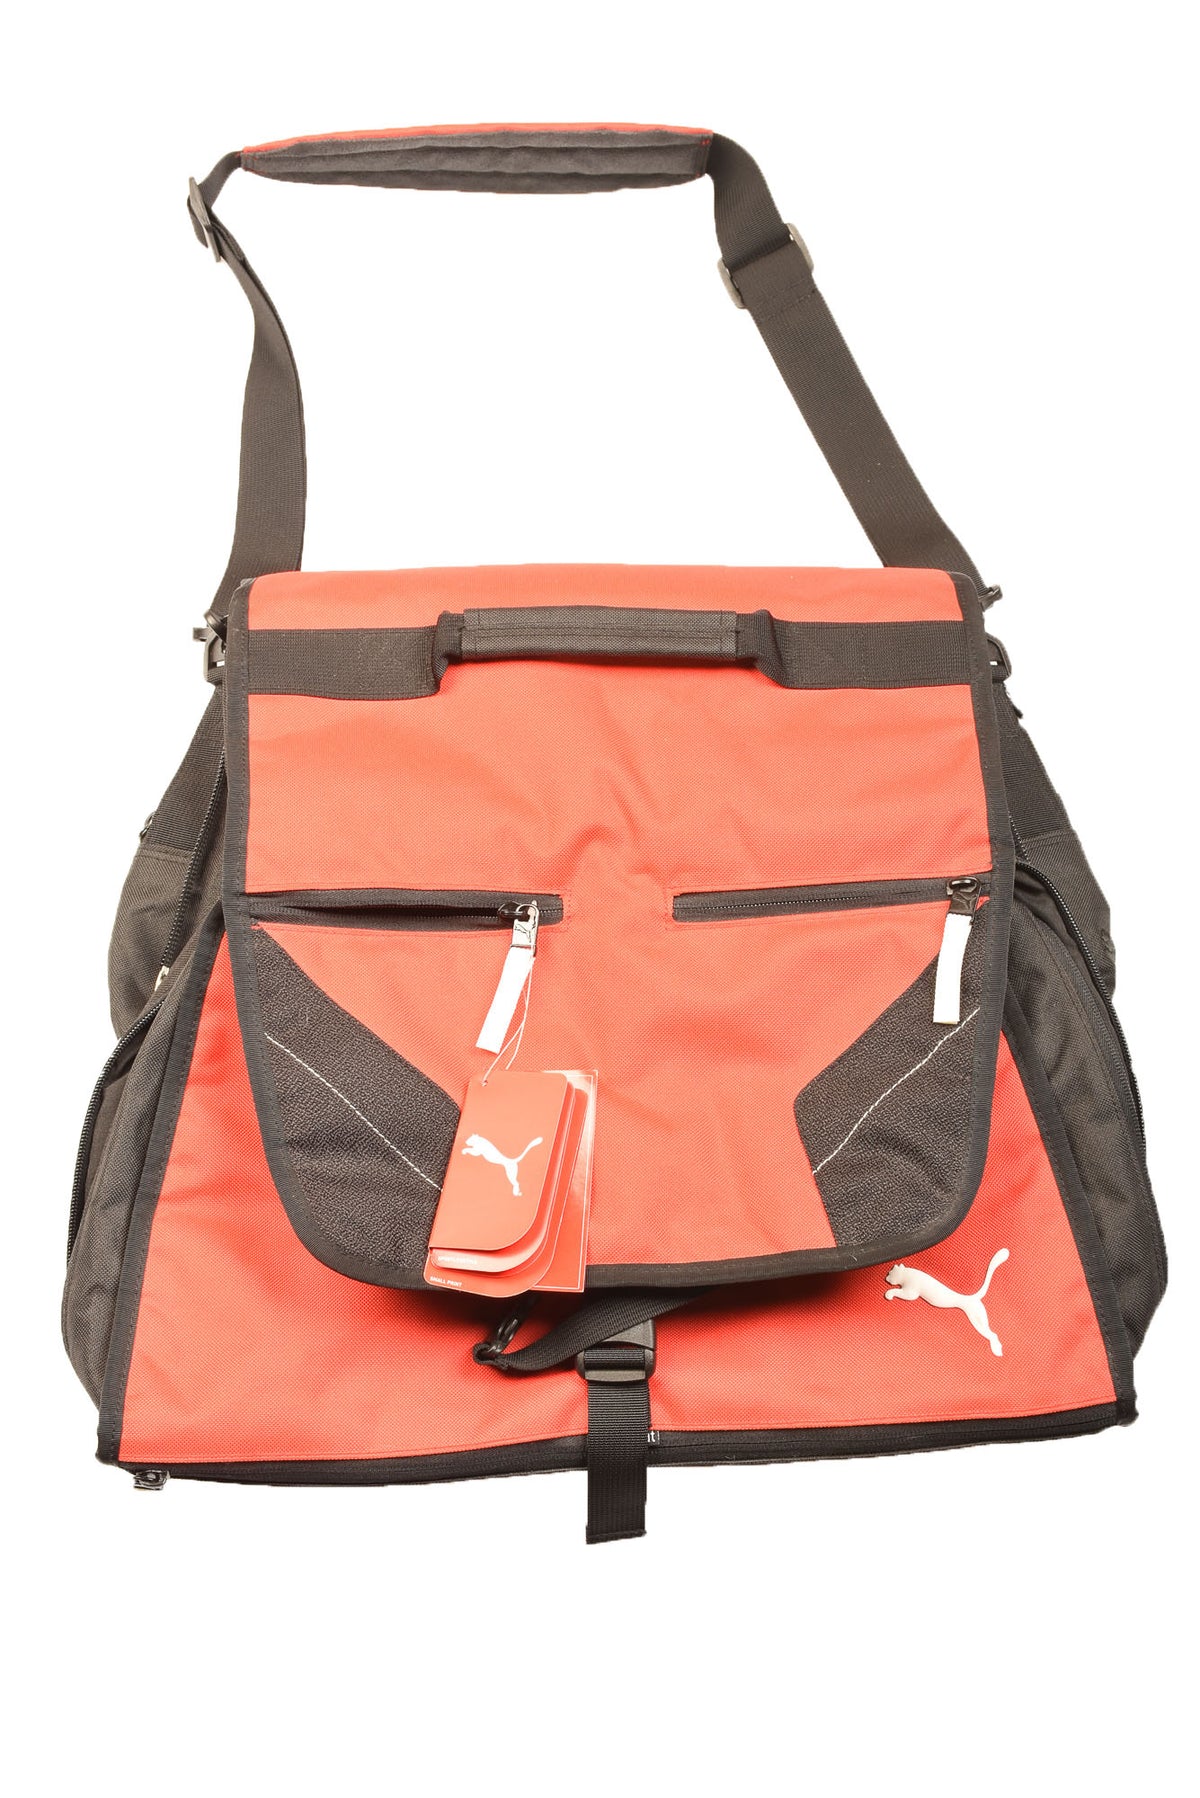 Puma Equipment Bag